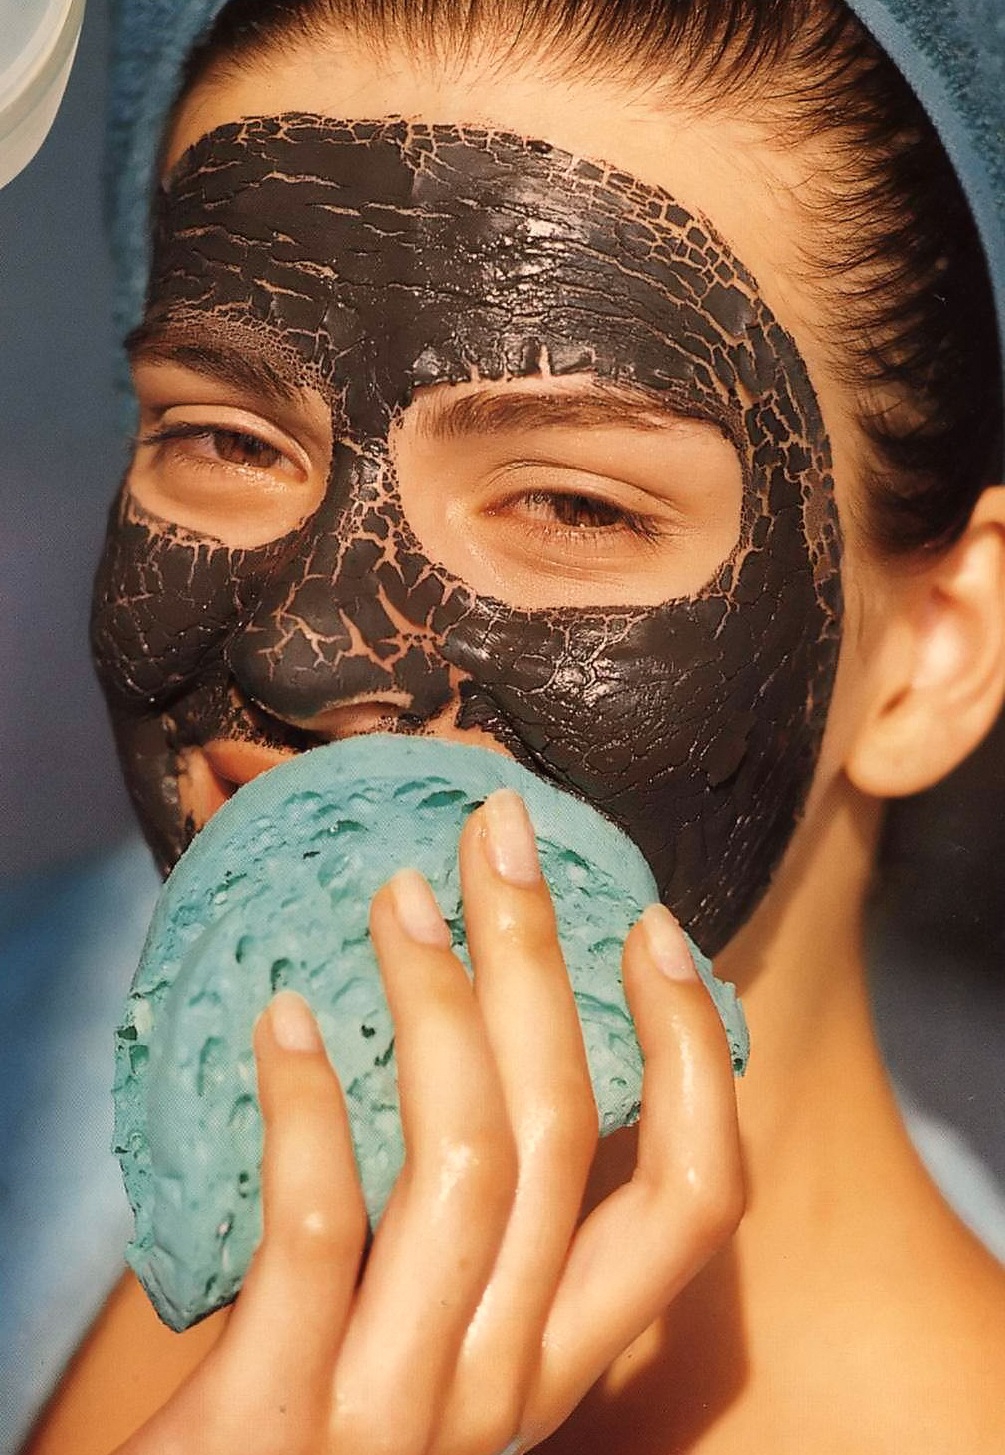 Когда лучше наносить маску. Маска для лица. М̆̈ӑ̈с̆̈к̆̈й̈ д̆̈л̆̈я̆̈ л̆̈й̈ц̆̈ӑ̈. Глиняная маска для лица. Маска из глины для лица.